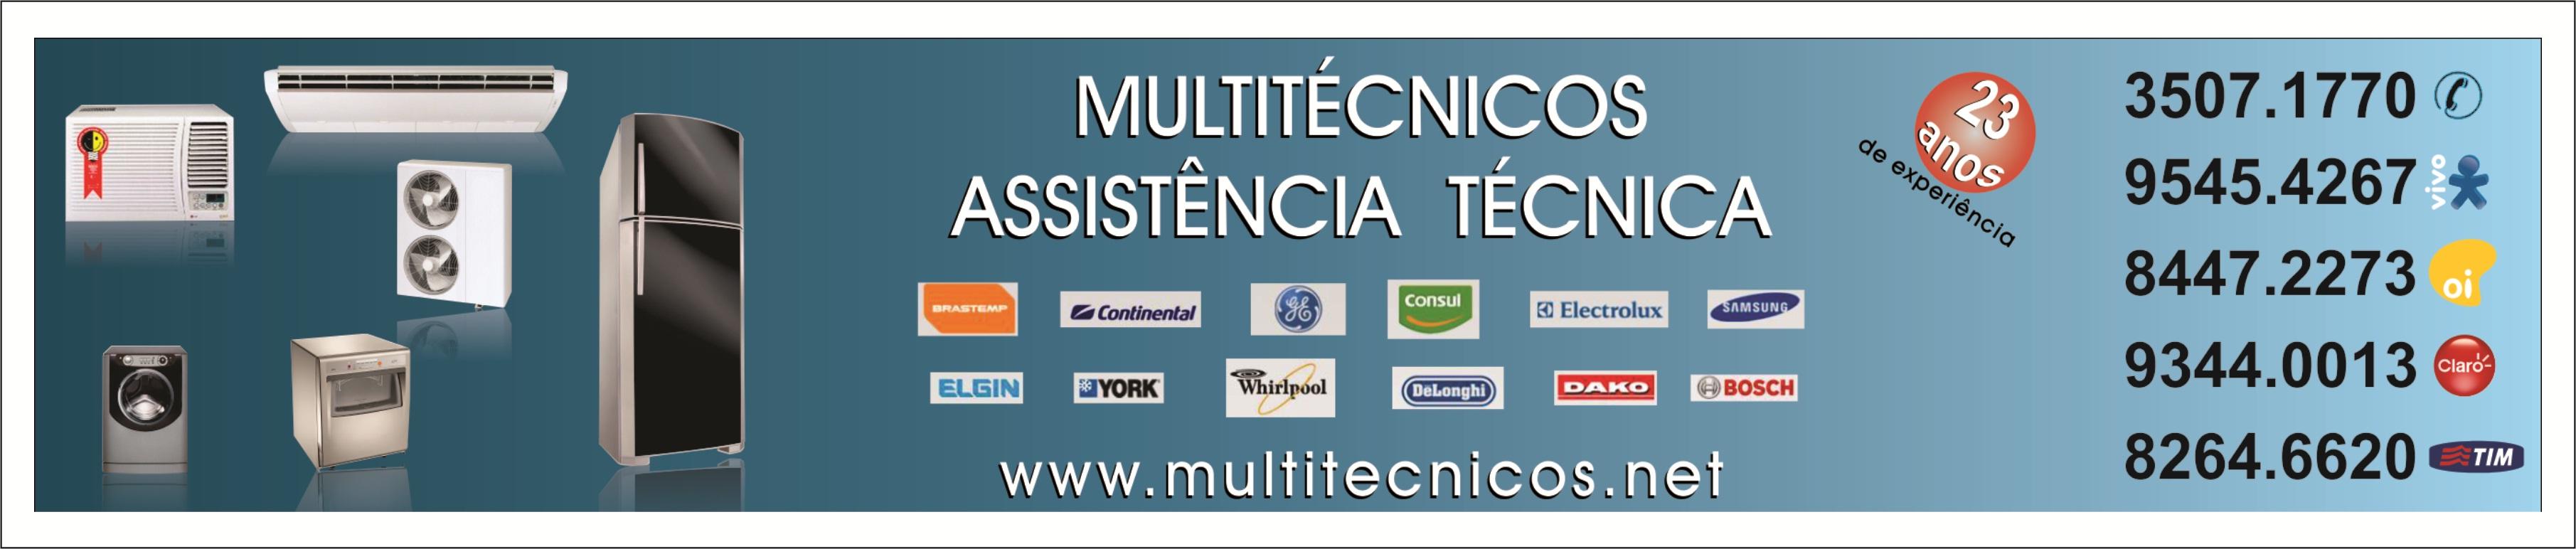 Multitécnicos Assistência Técnica logo